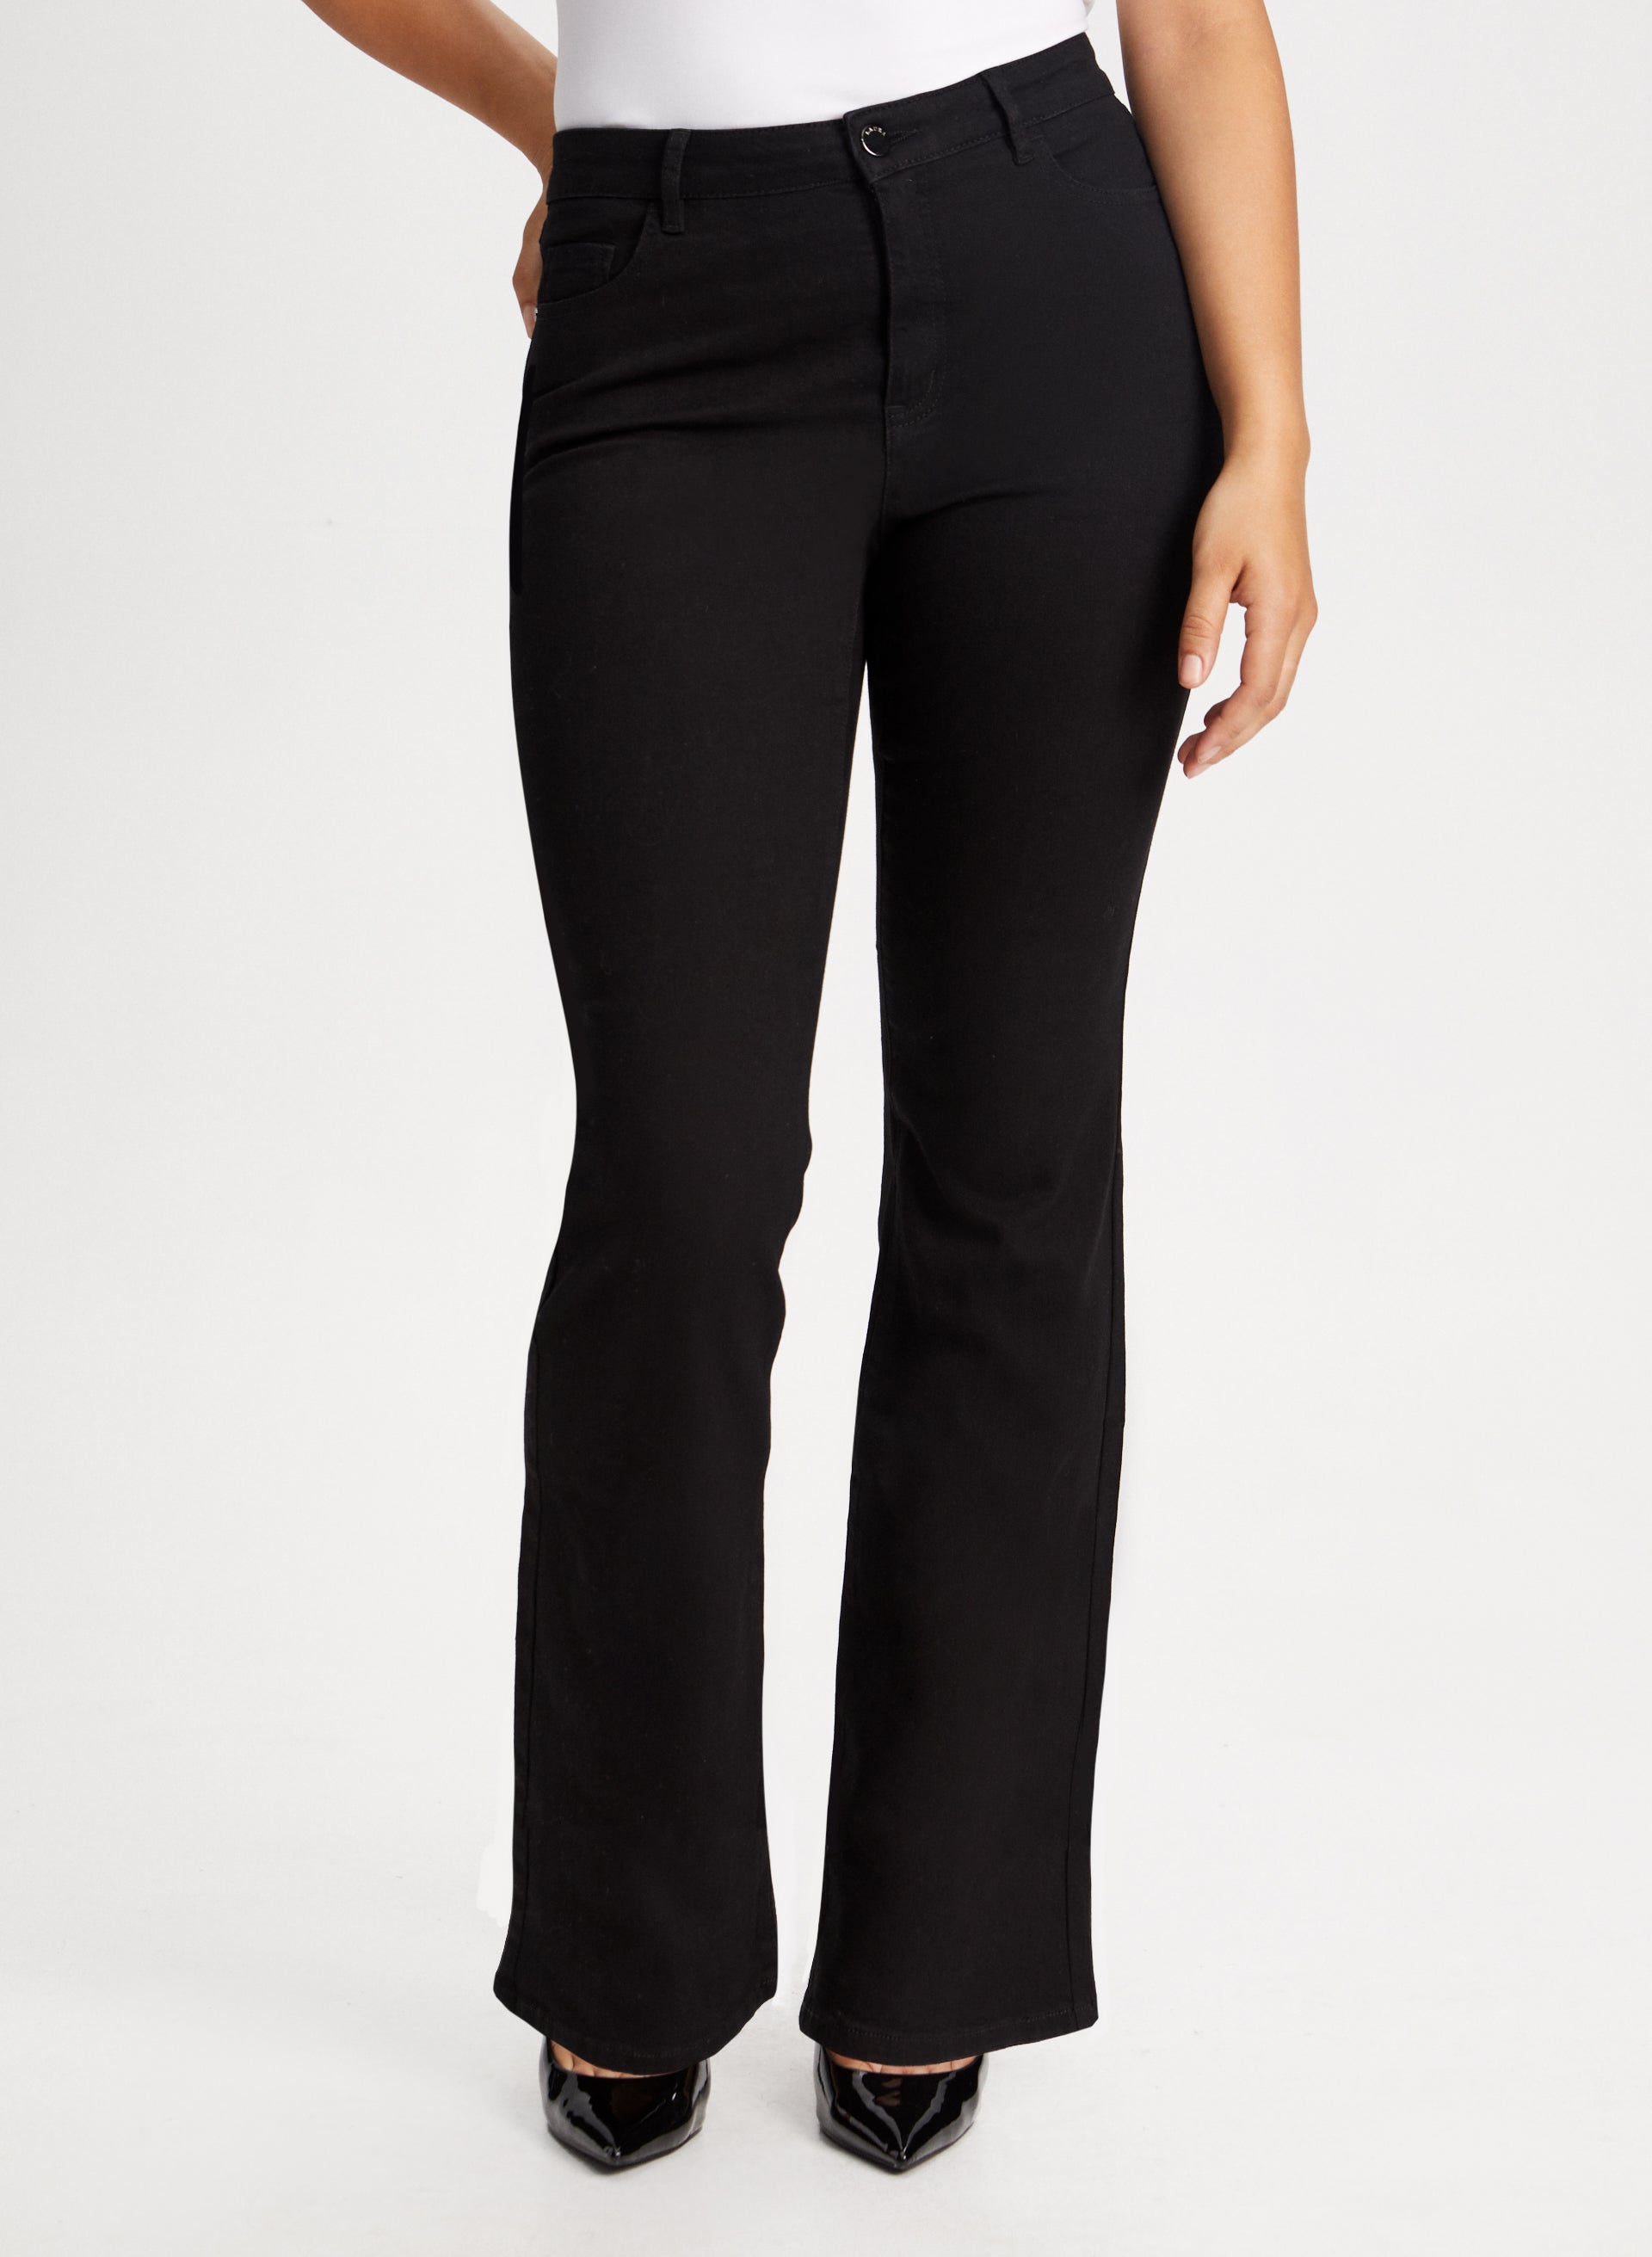 Elegant Black Denim Boot Cut Jeans For Women at Rs 687.00, Boot Cut Jeans